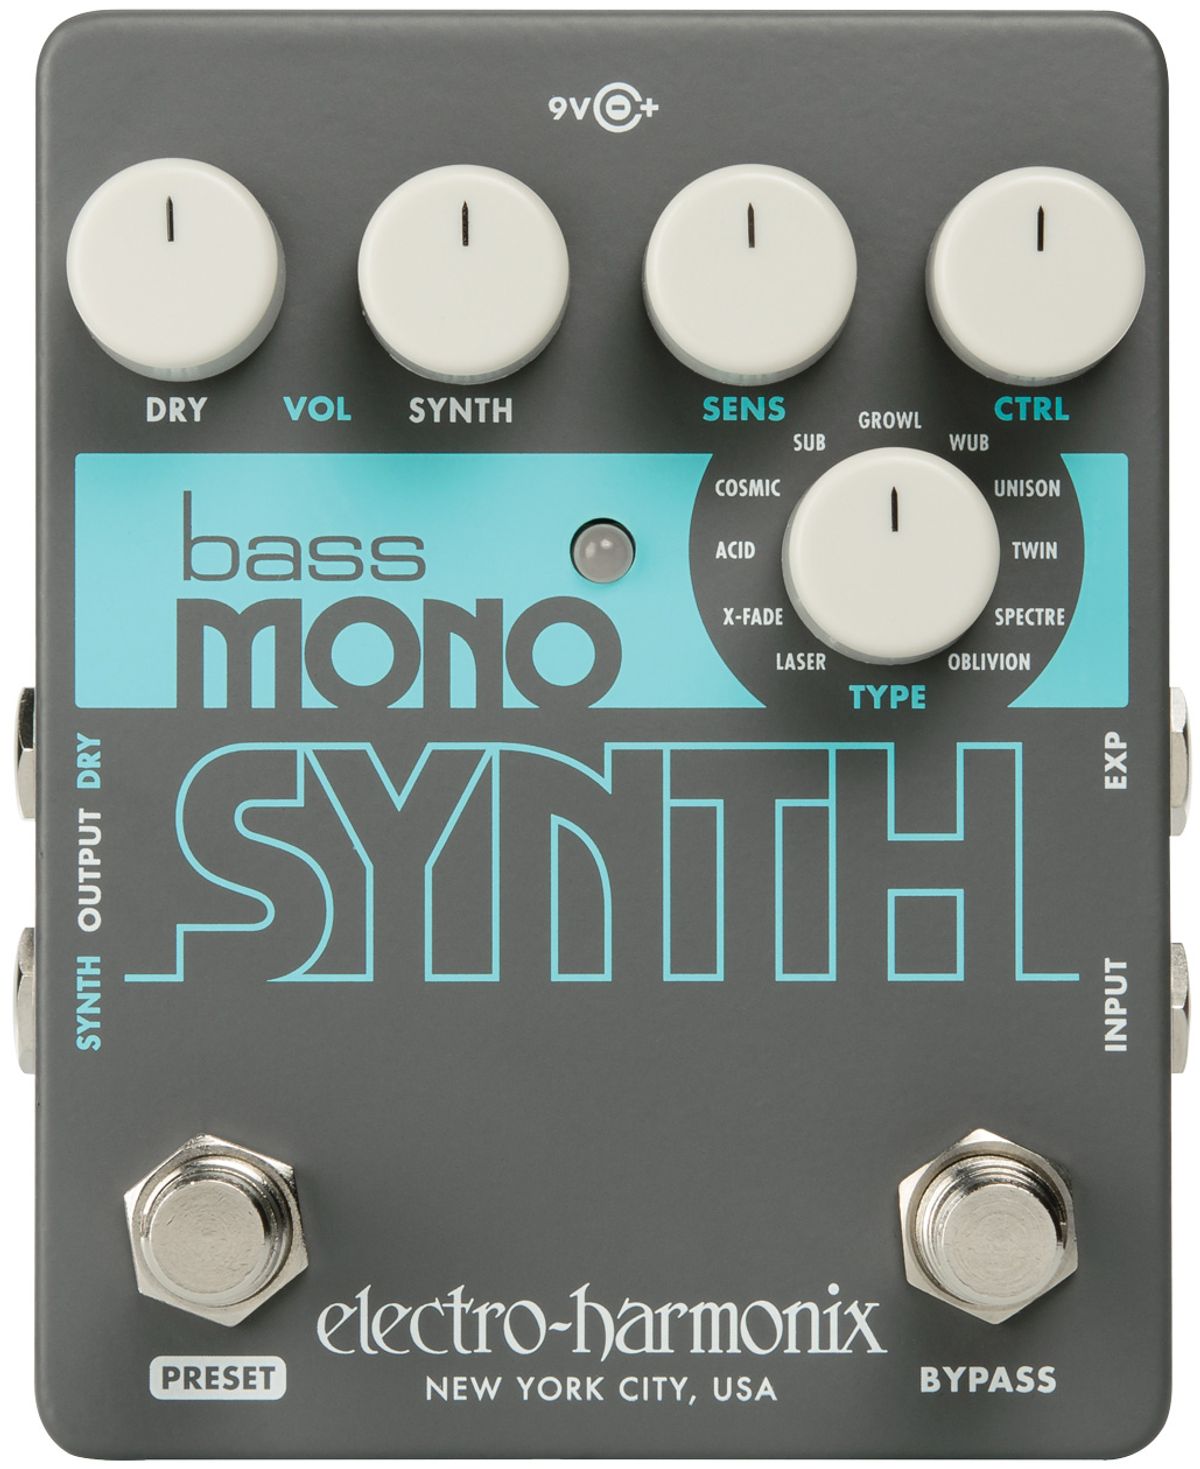 Electro-Harmonix Bass Mono Synth Review